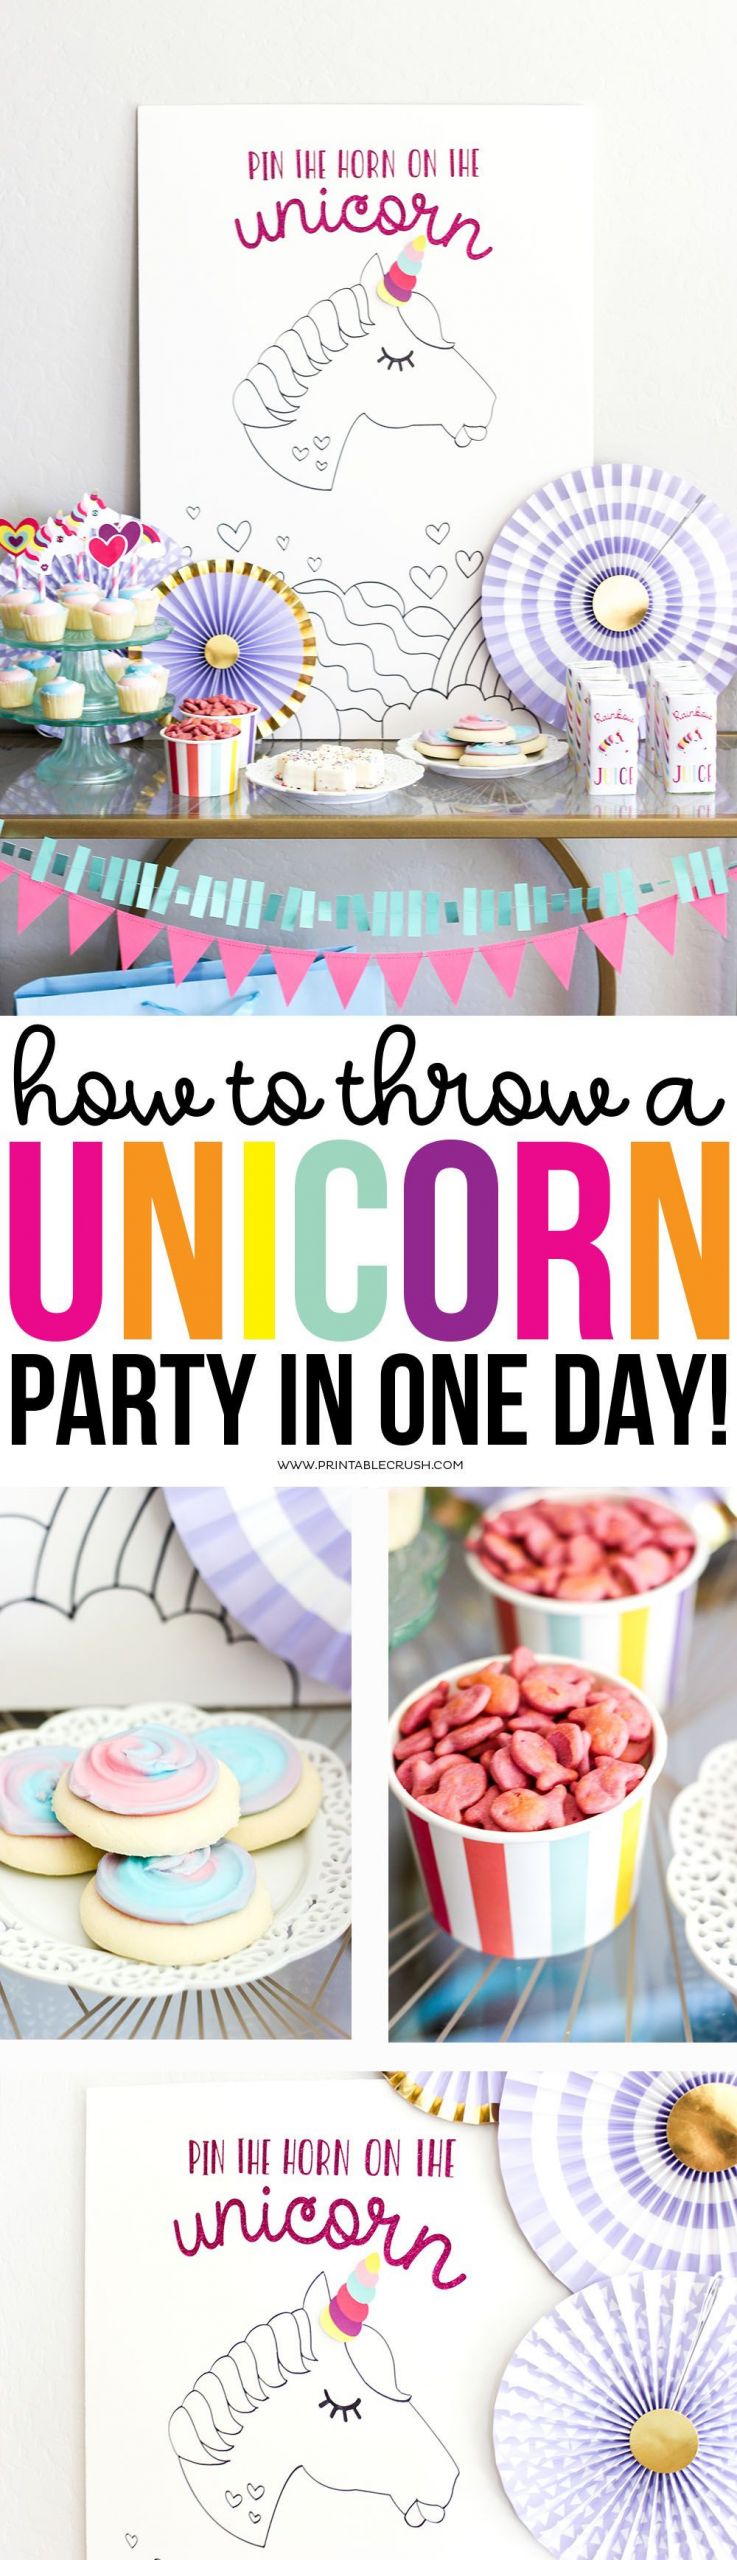 Unicorn Party Ideas On A Budget
 Unicorn Party Supplies Throw a Bud Friendly Unicorn